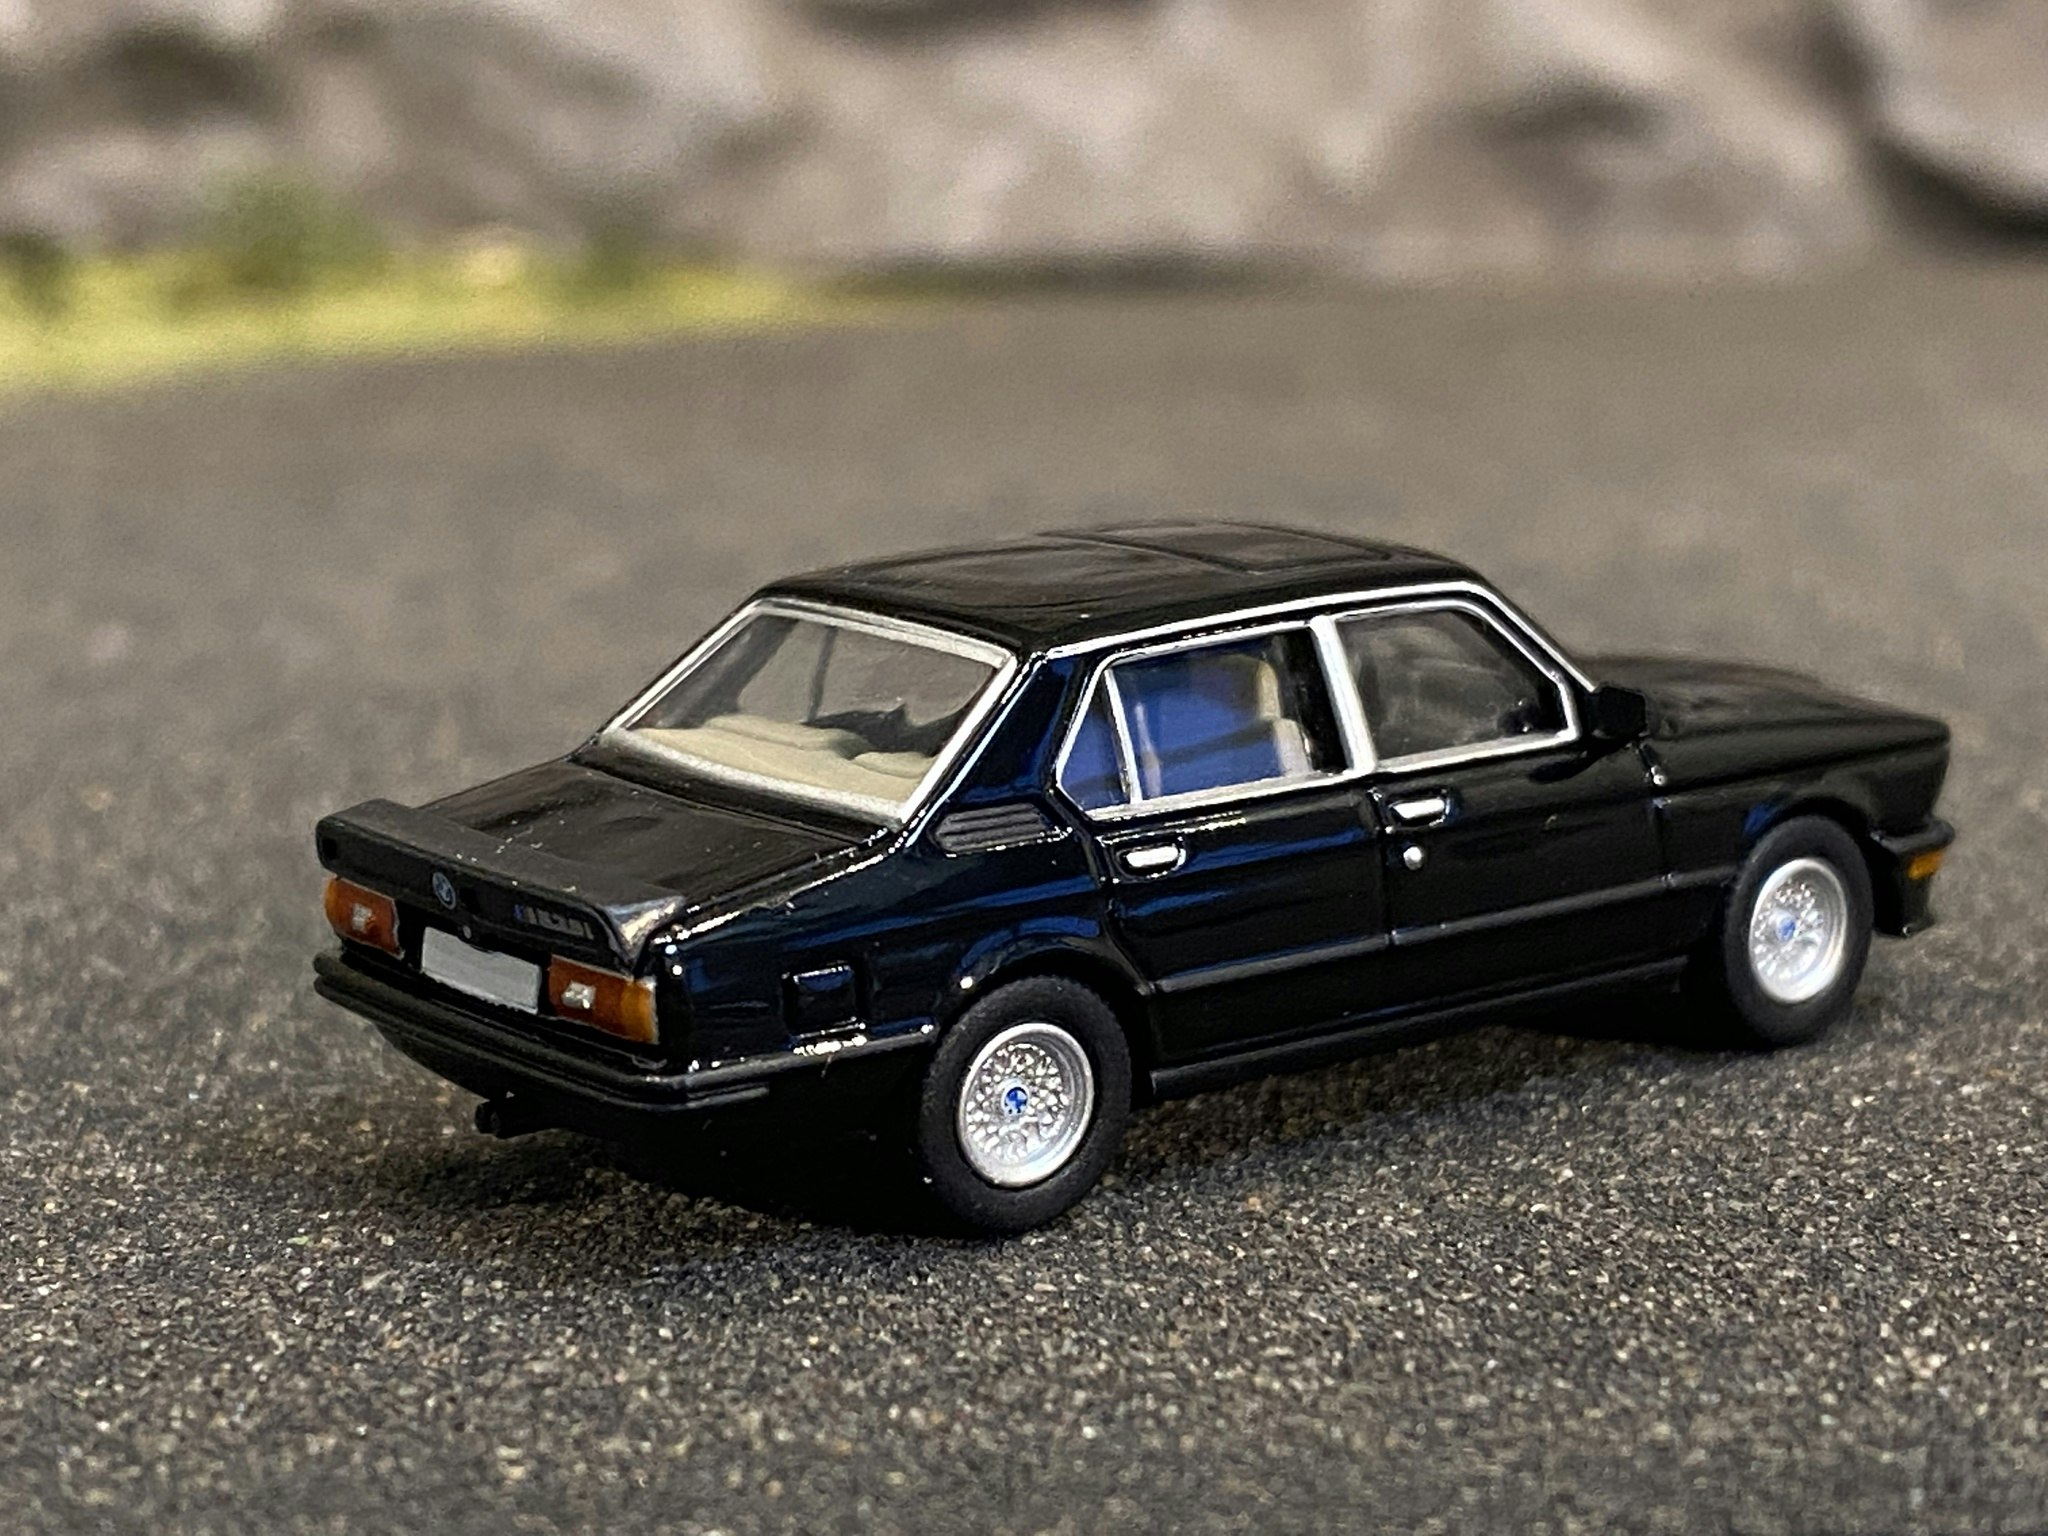 Skala 1/87 - BMW 535i (E12), Svart från PCX87